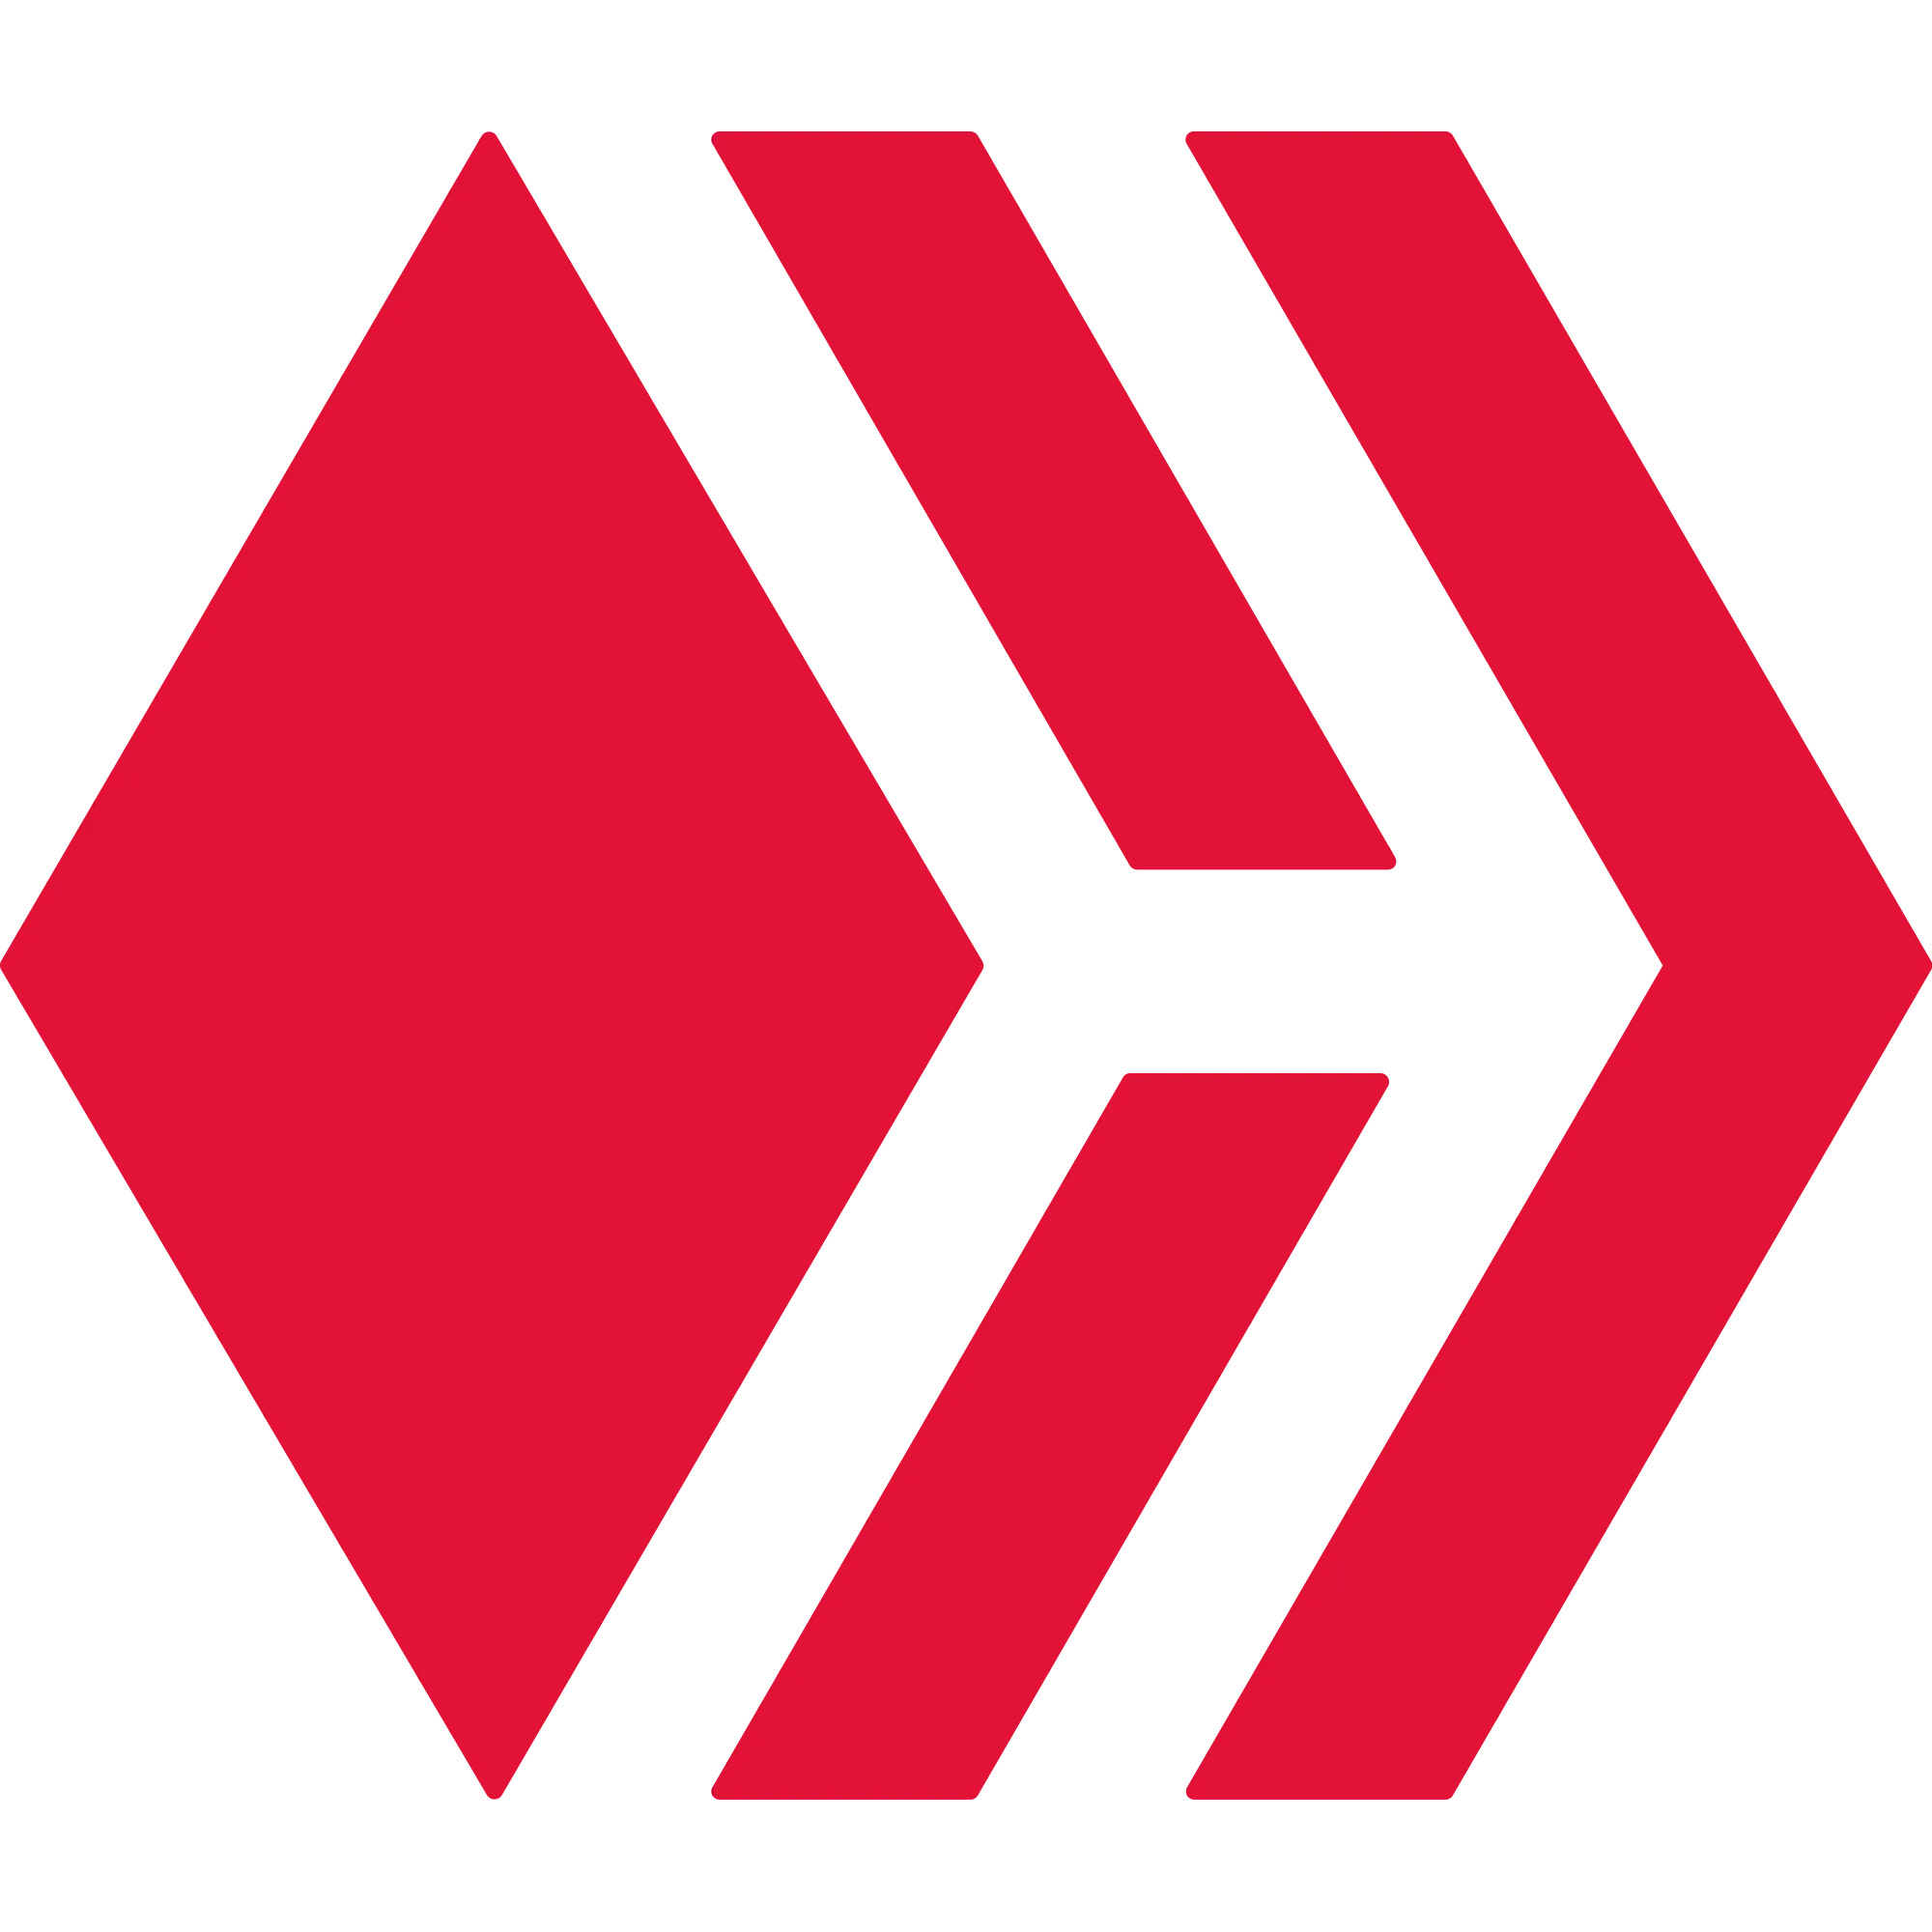 Hive (HIVE) logo